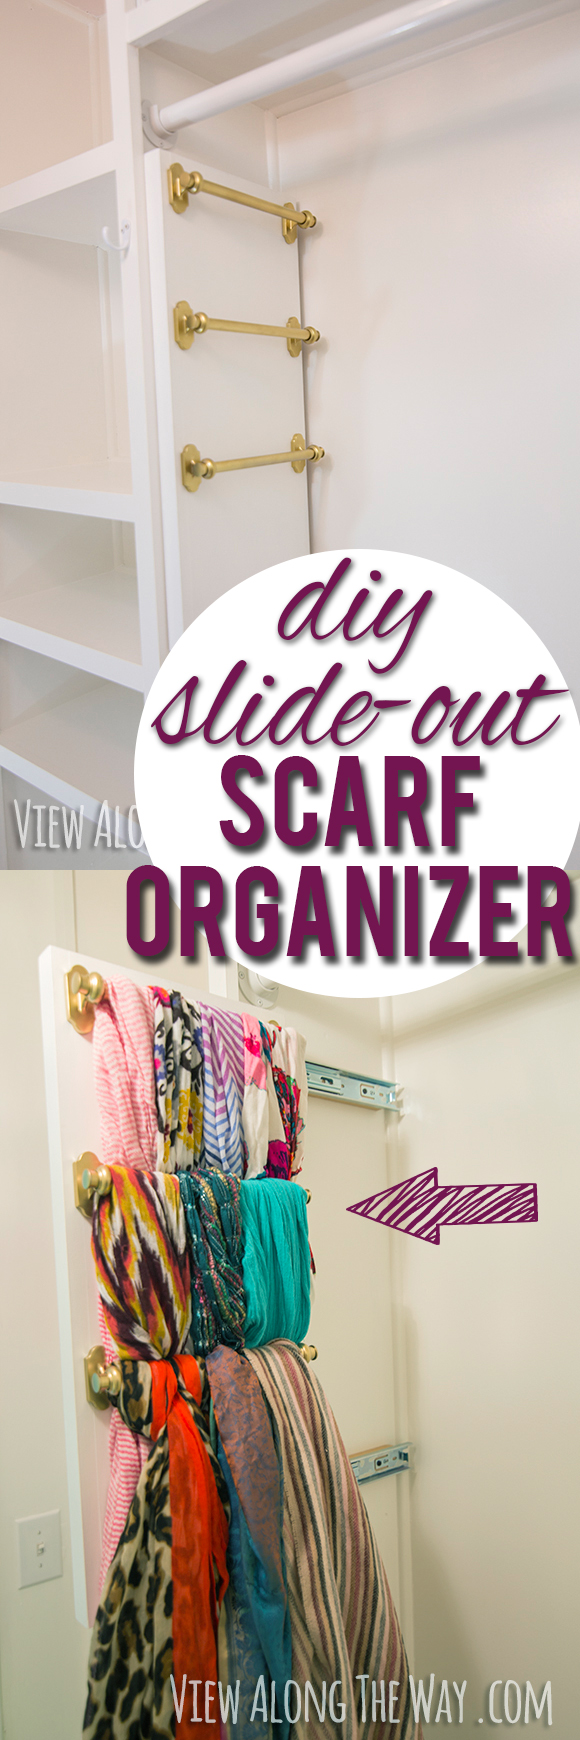 DIY_slide_out_scarf_organizer